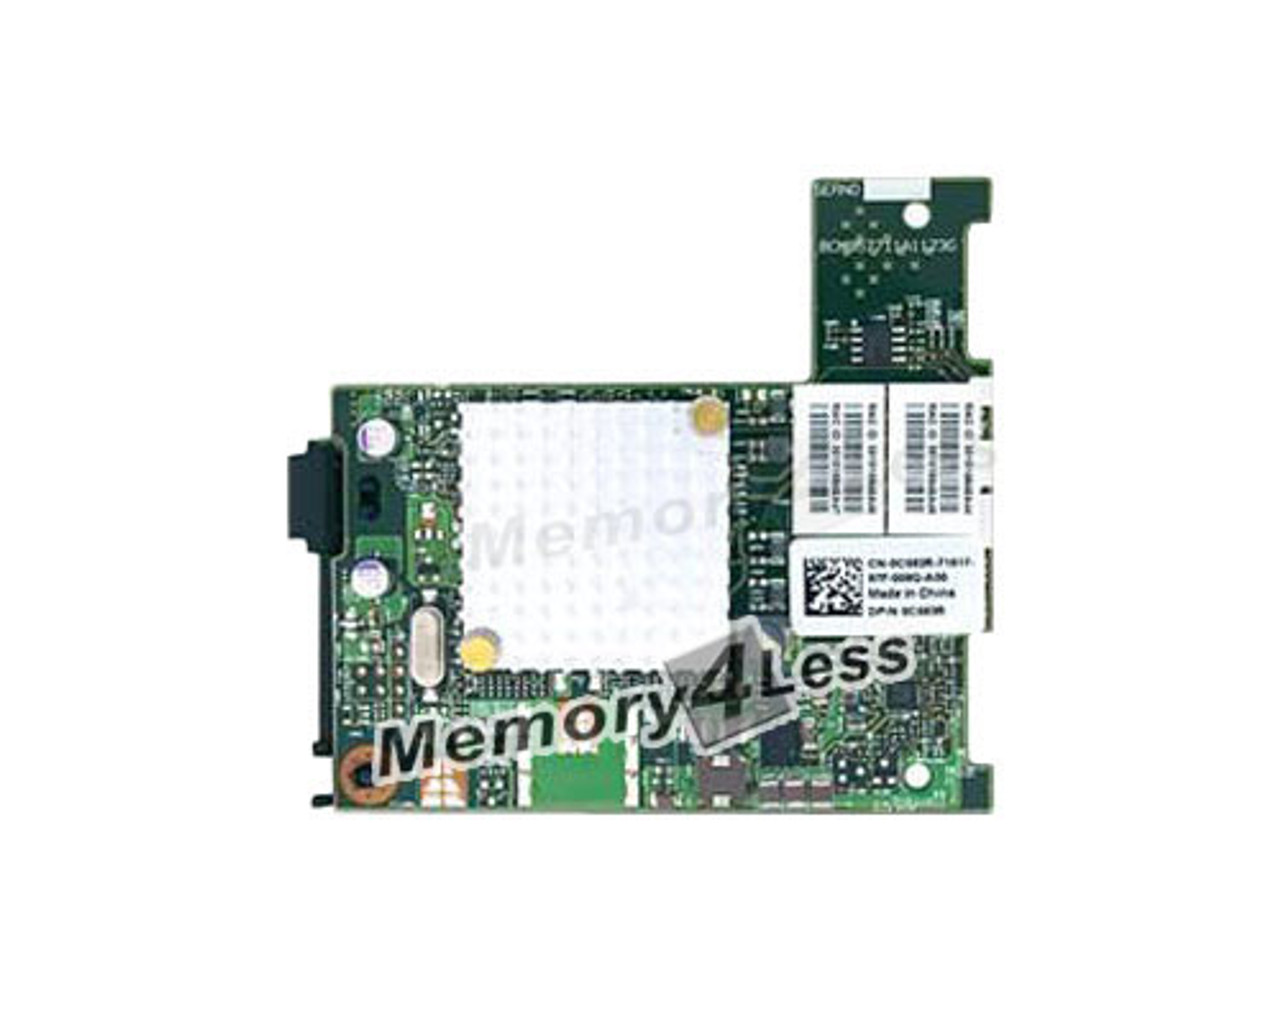 D346R Dell NetXtreme II 57711 Dual Port Gigabit I/O Network Card for Dell PowerEdge M600/ M605/ M805/ M905 Servers